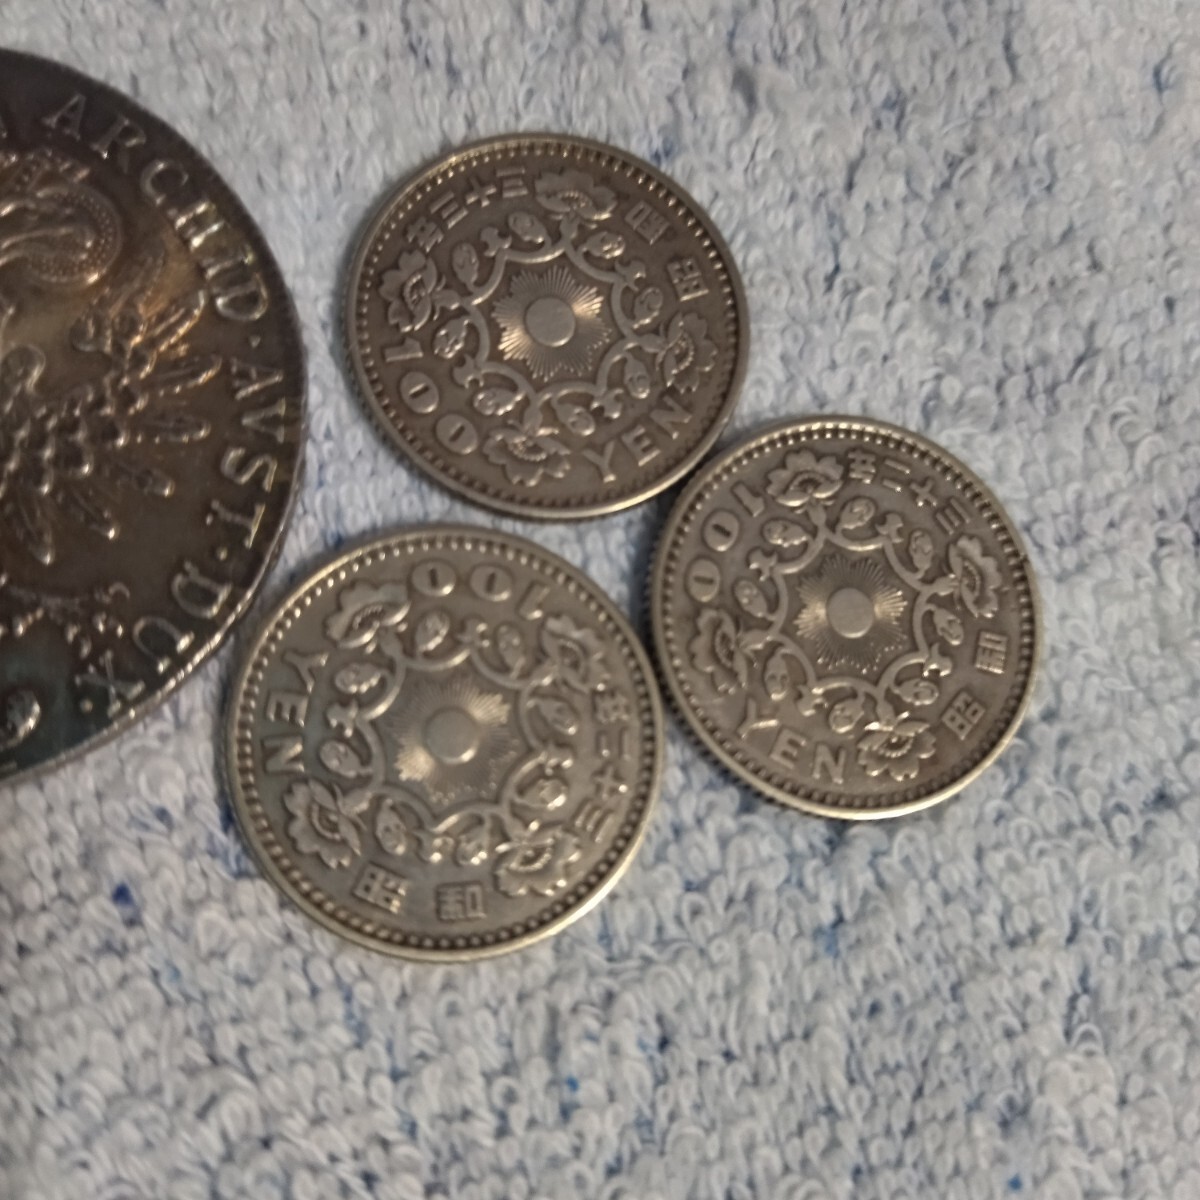  Japan Australia phoenix 100 jpy silver coin Mali a*terejia silver coin coin old coin 